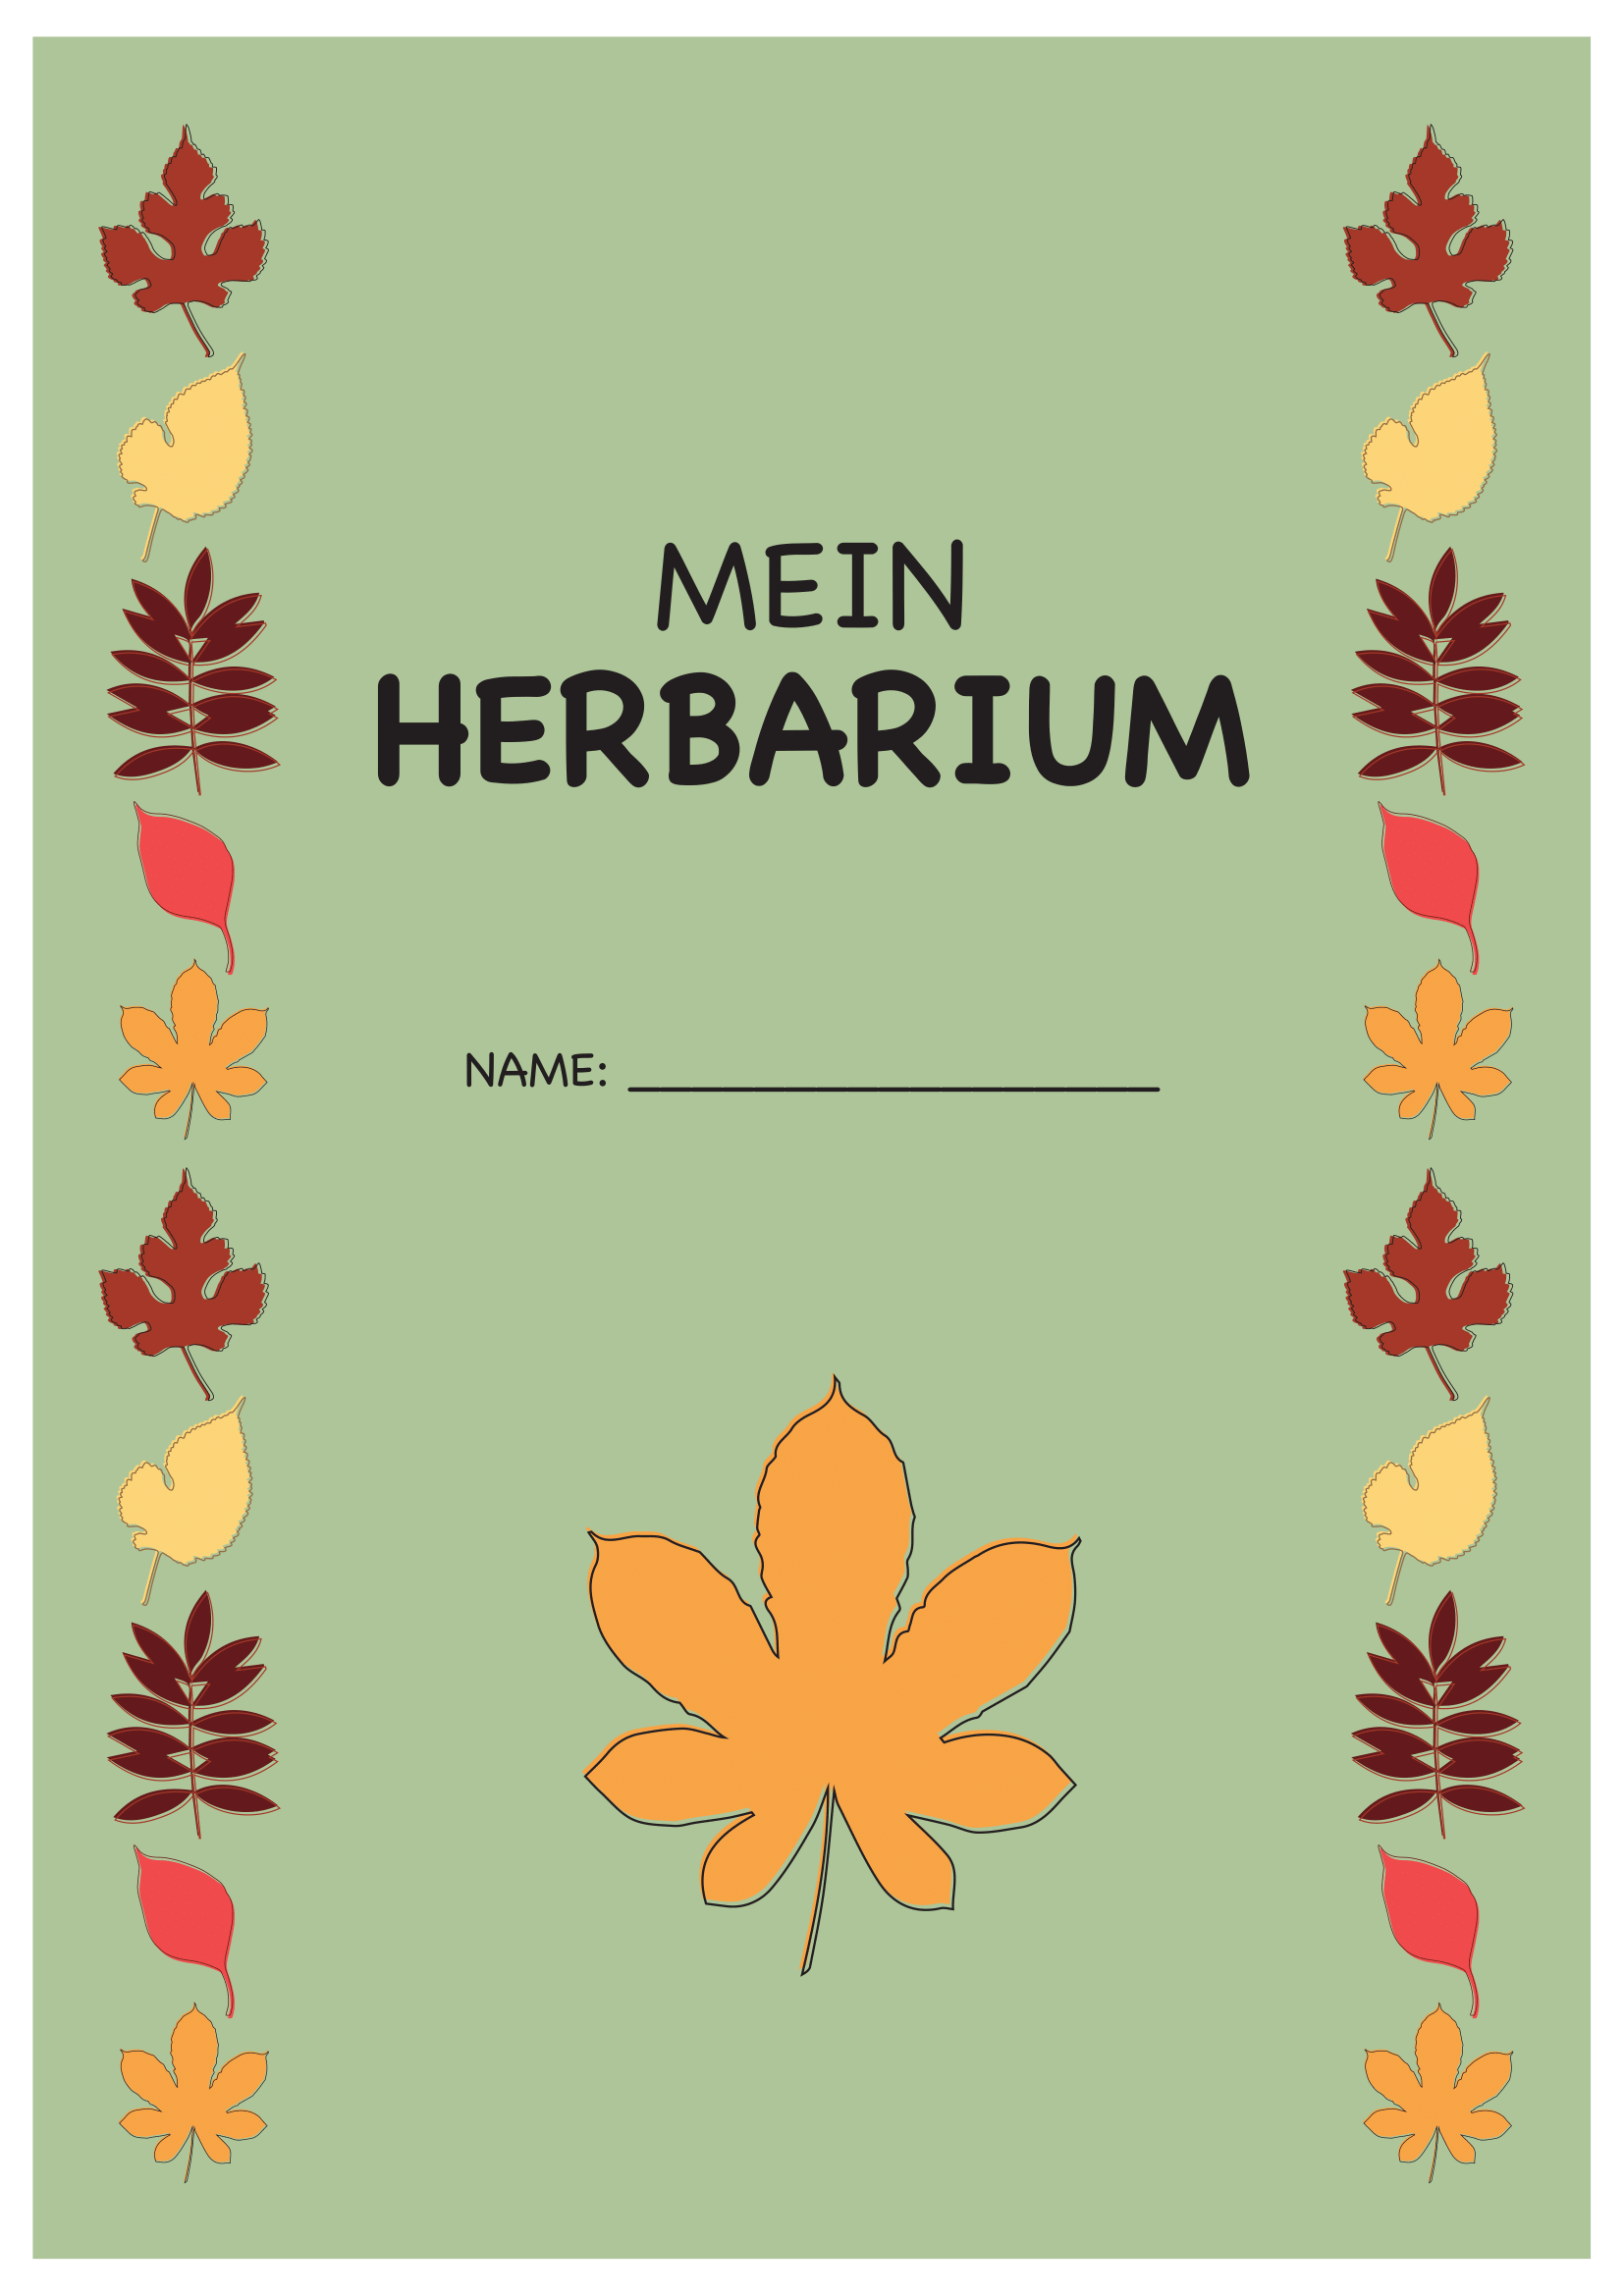 Deckblatt Herbarium 3 Deckblatt Vorlage Deckblatt Schule Deckblatt